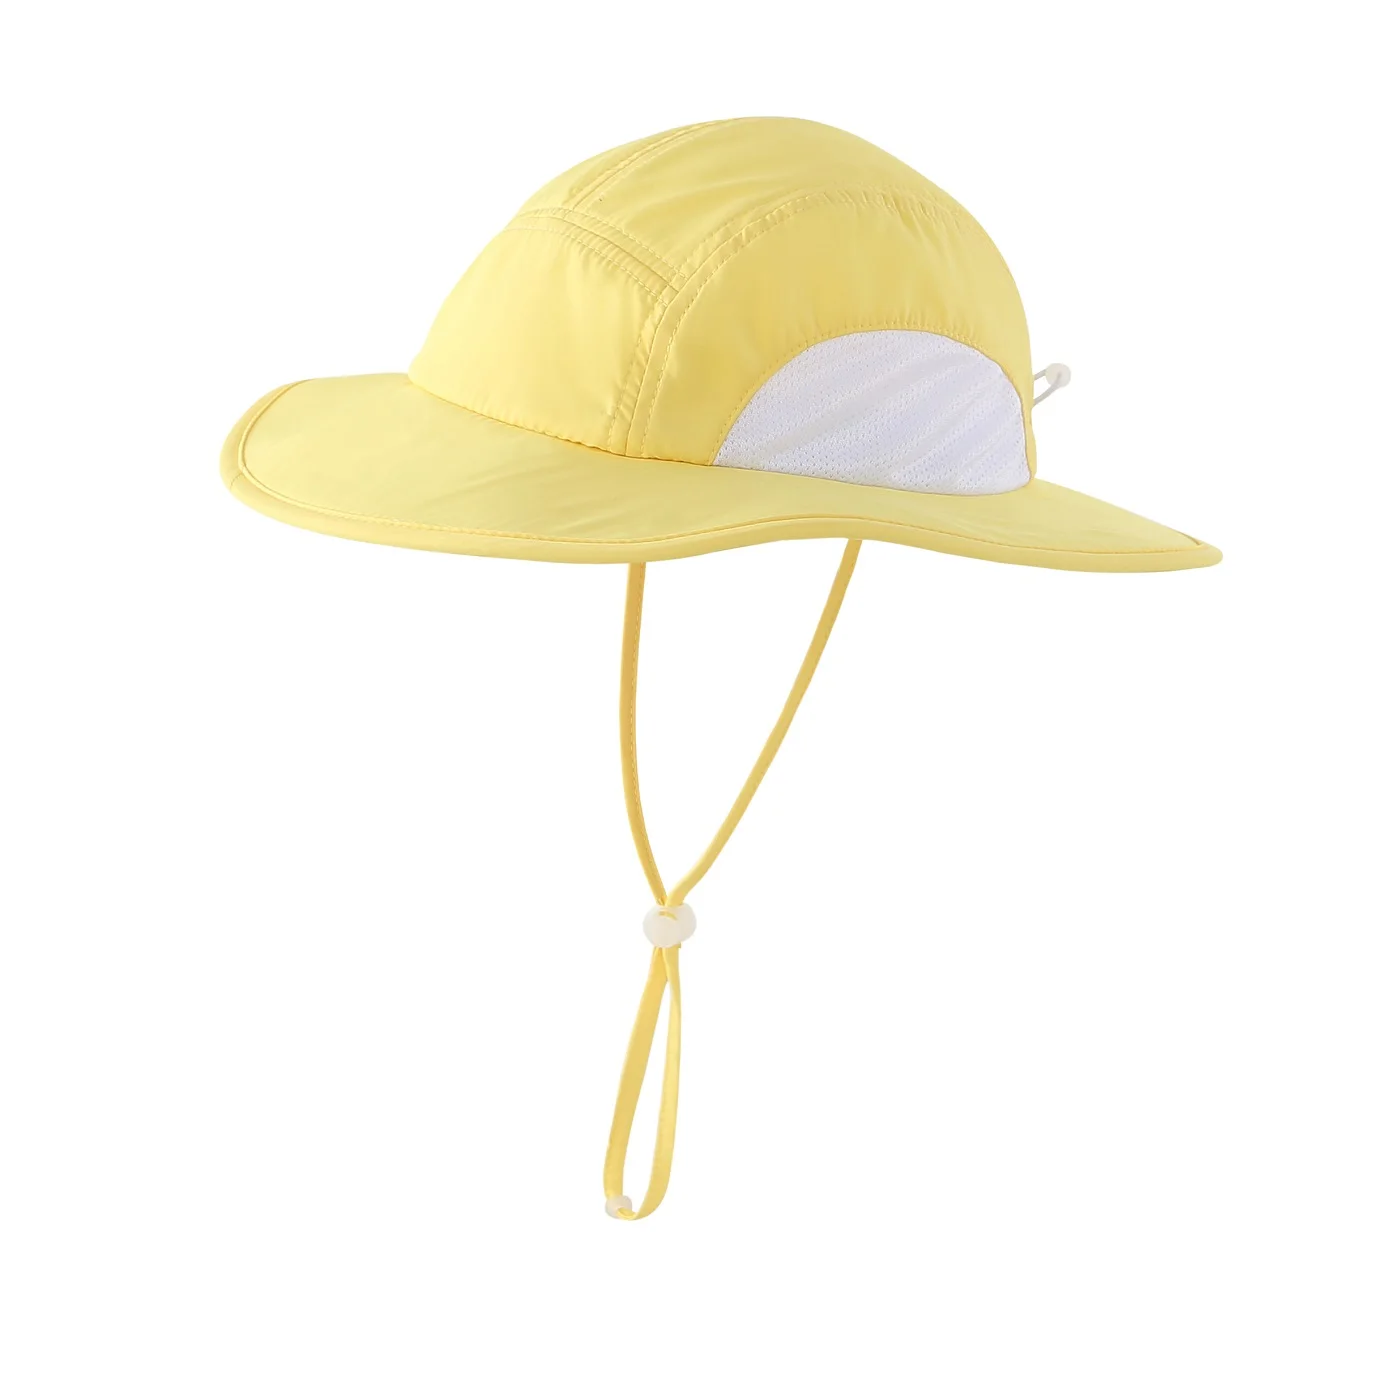 Соединительная сетка для малышей, младенцев, мальчиков и девочек, UPF 50+, УФ Защита от солнца, шляпа от солнца с широкими полями, Детские кепки от солнца